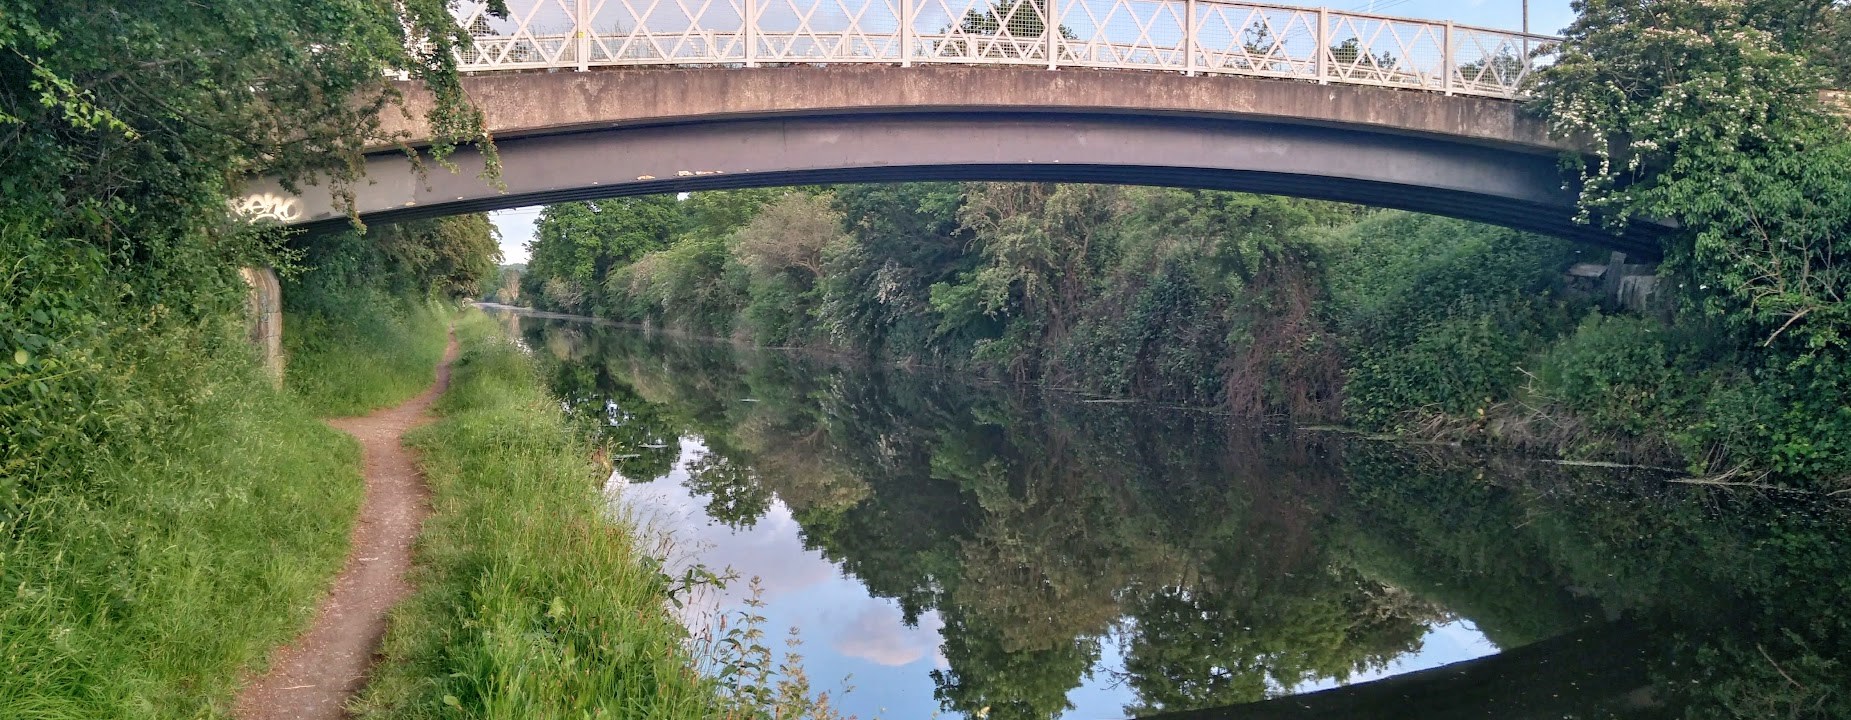 Lady Ann Bridge, Calder and Hebble Canal